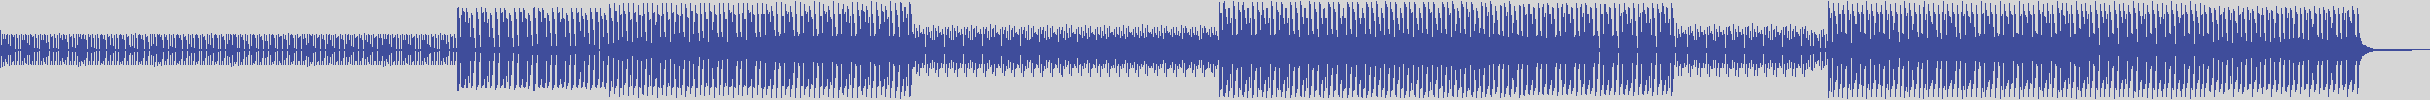 nf_boyz_records [NFY010] Jack Zombie - Moxa [Tibal Mix] audio wave form